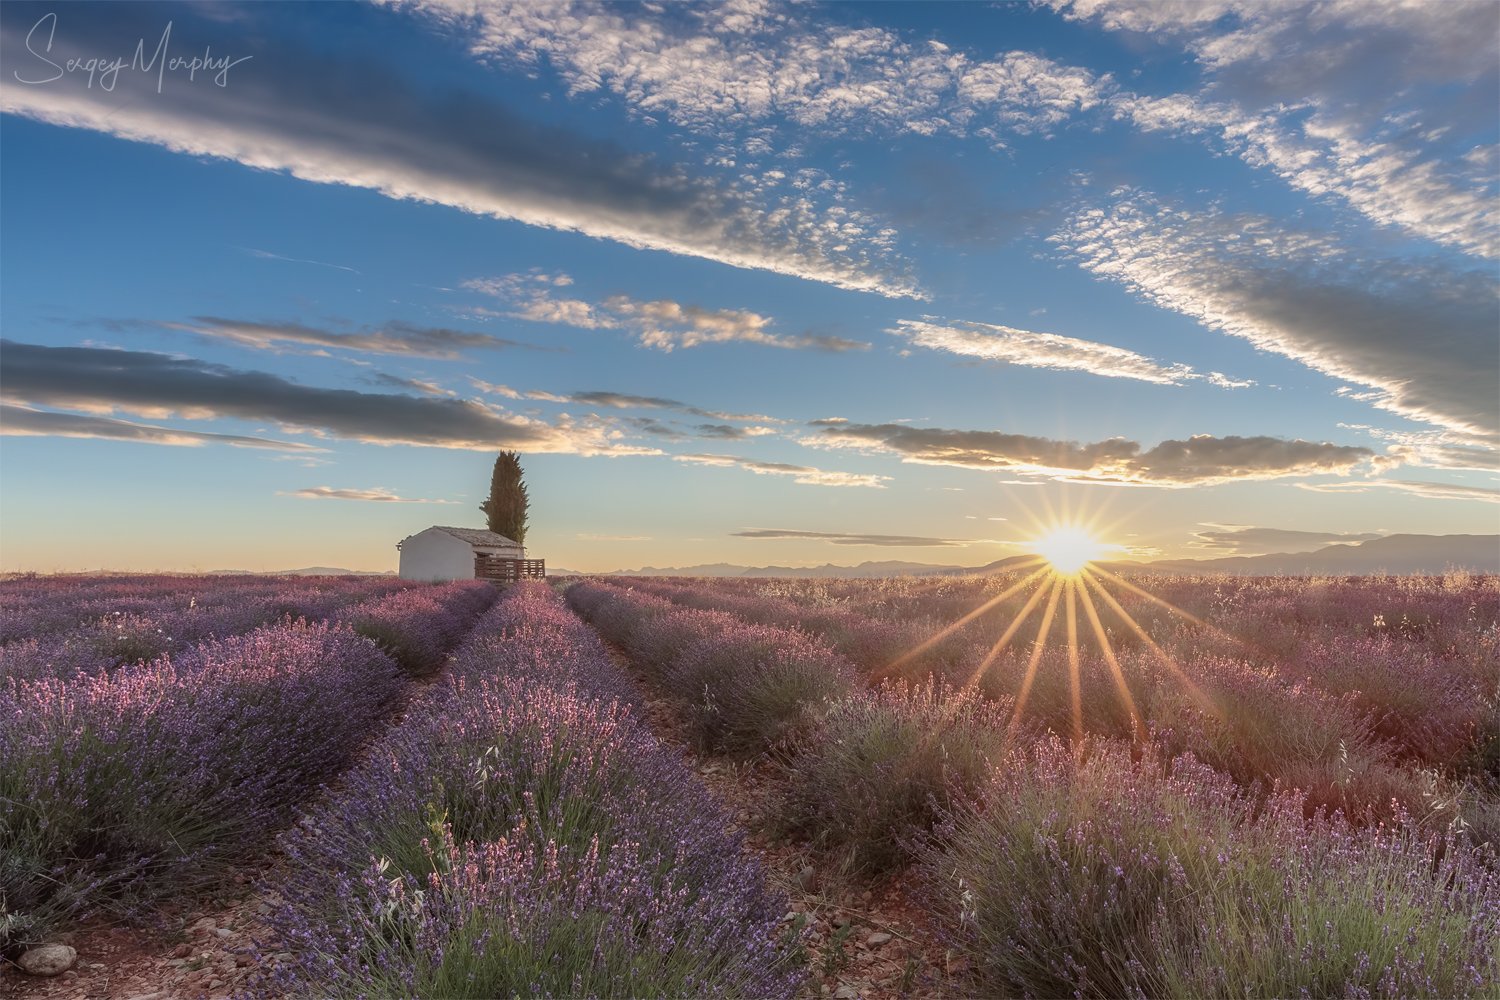 sunrise lavender fields, Sergey Merphy